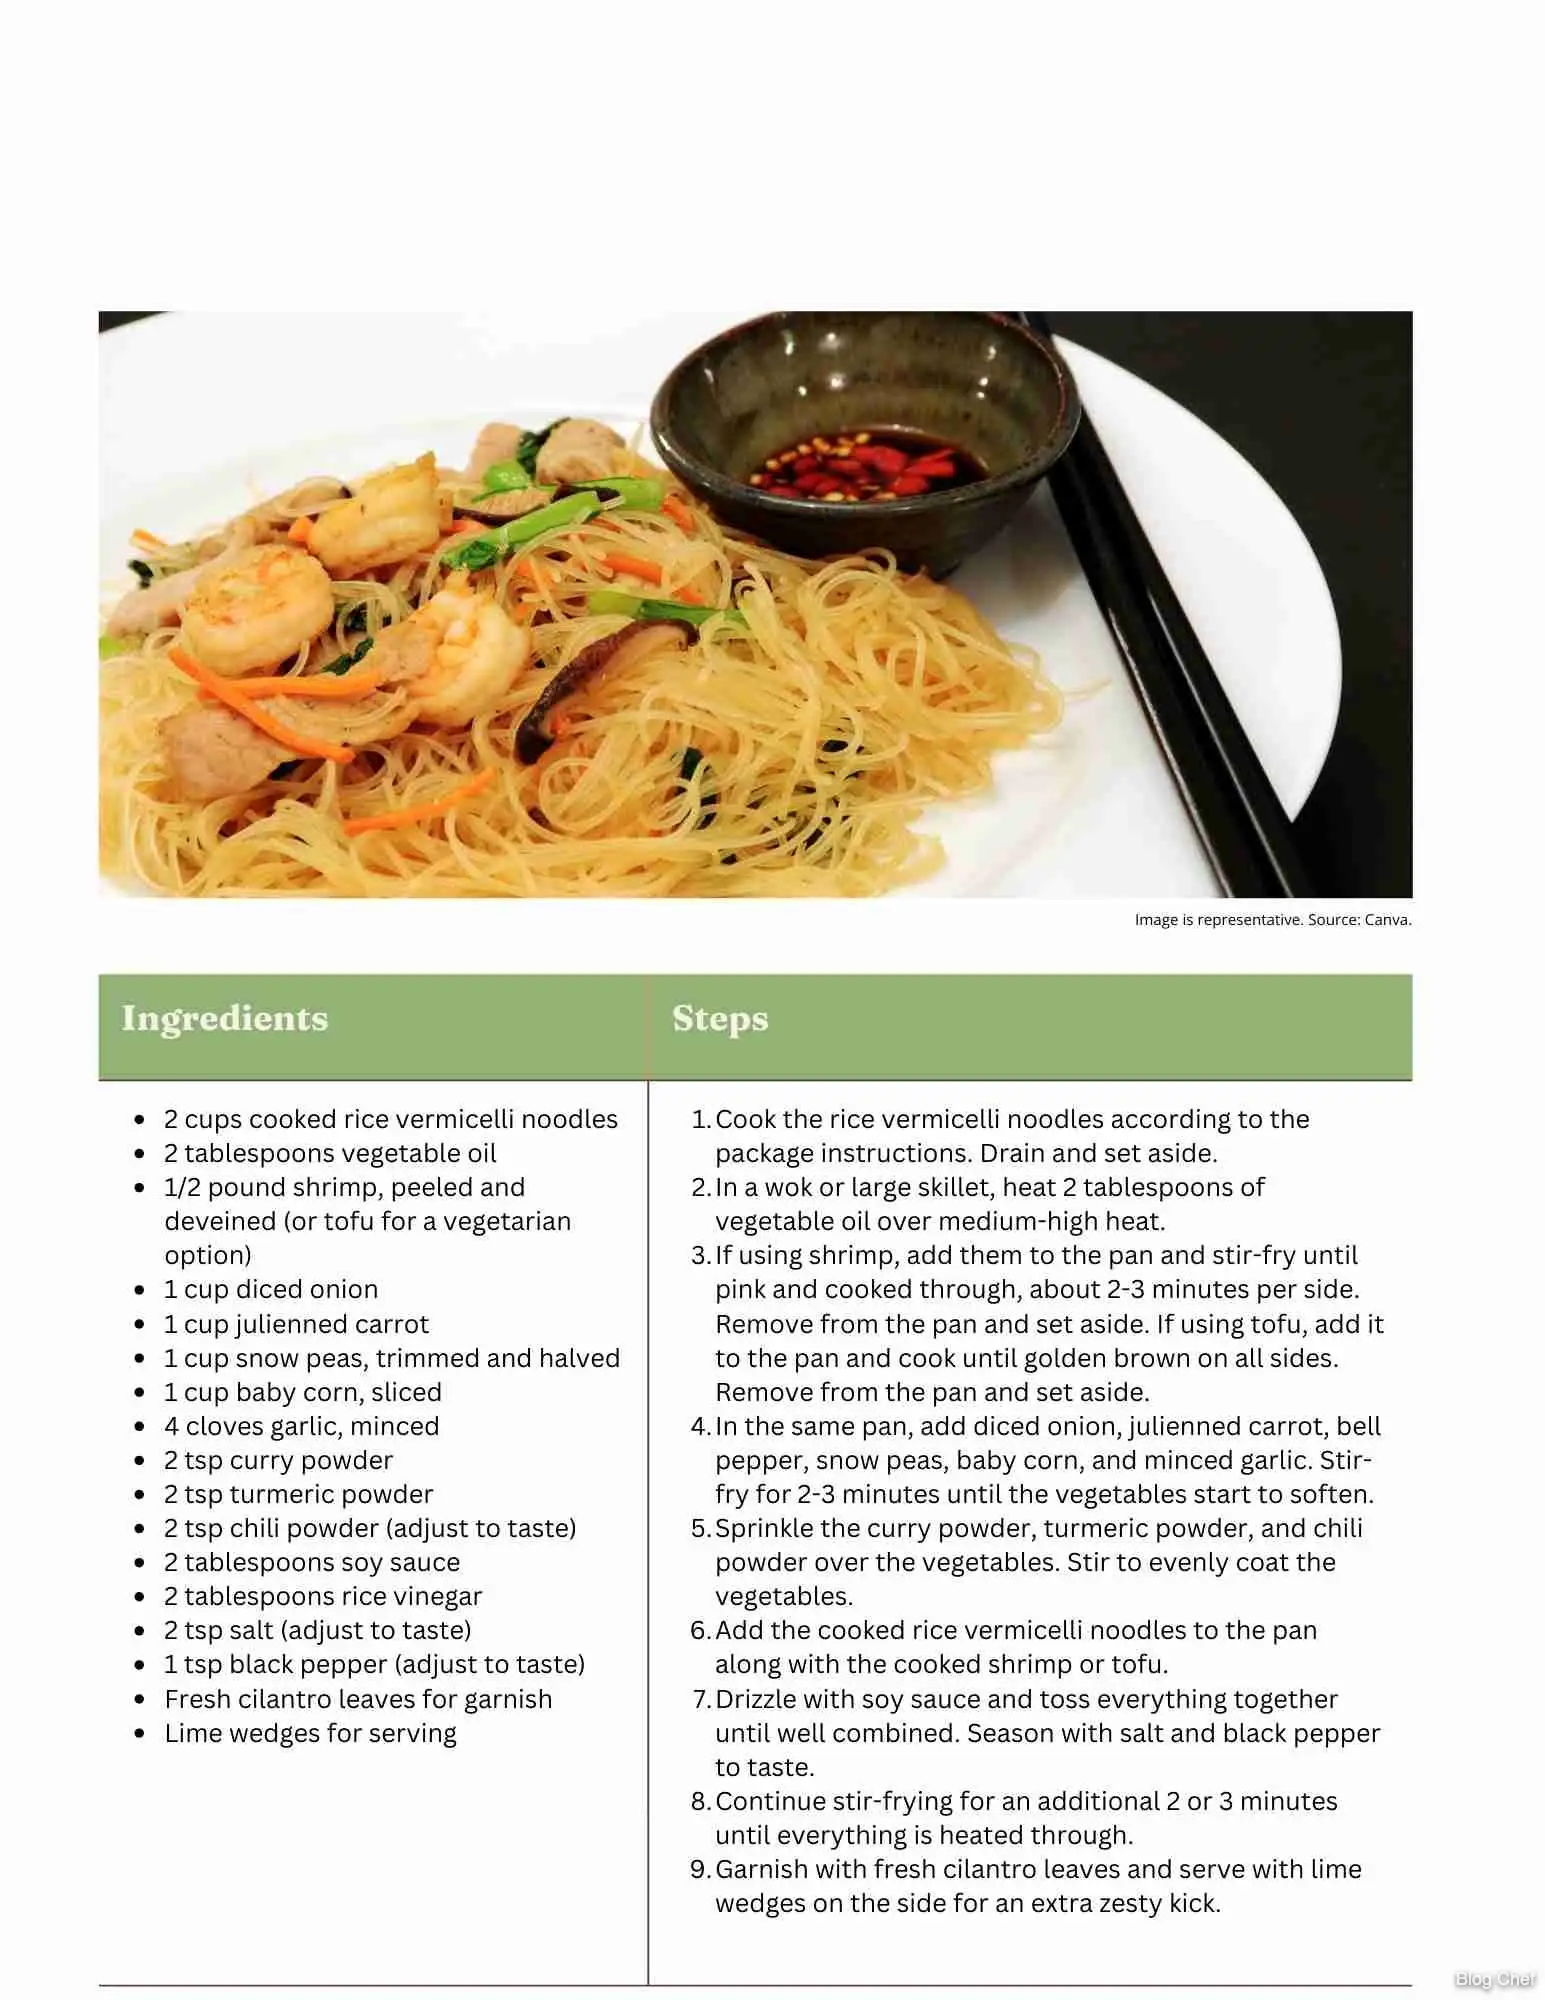 Recipe card for Singapore noodles.